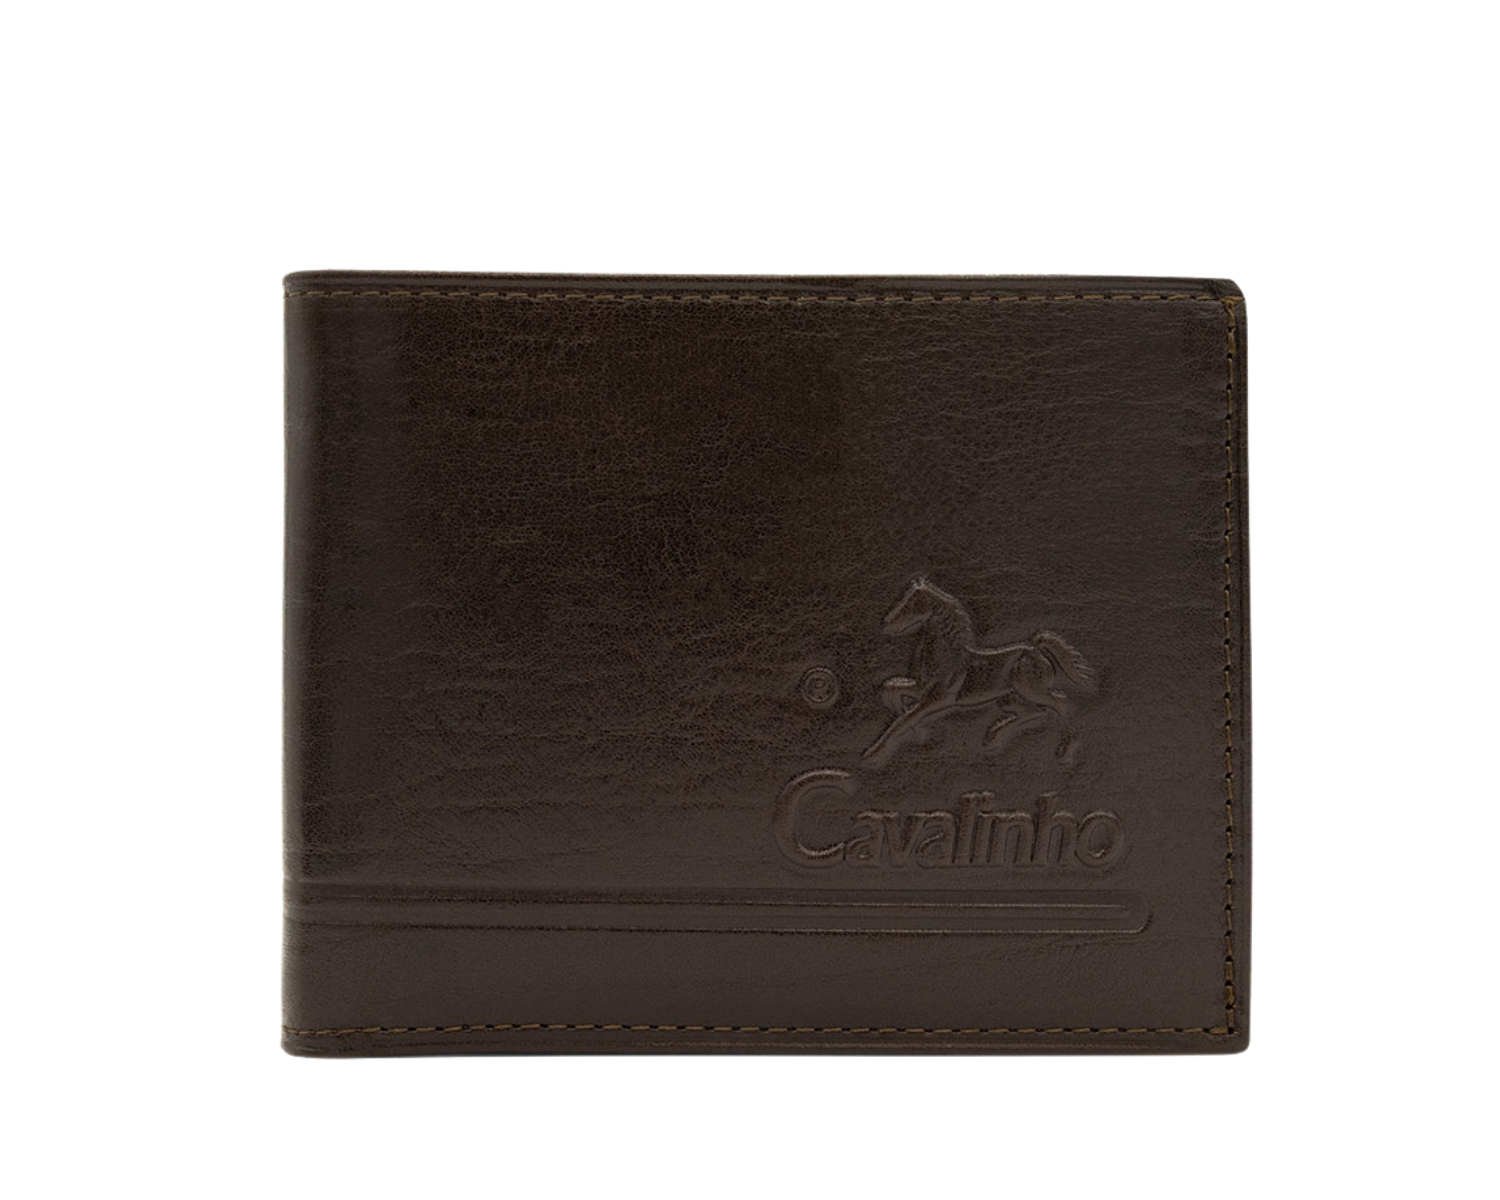 Cavalinho Men's Trifold Leather Wallet - Brown - 28610505.02_P01